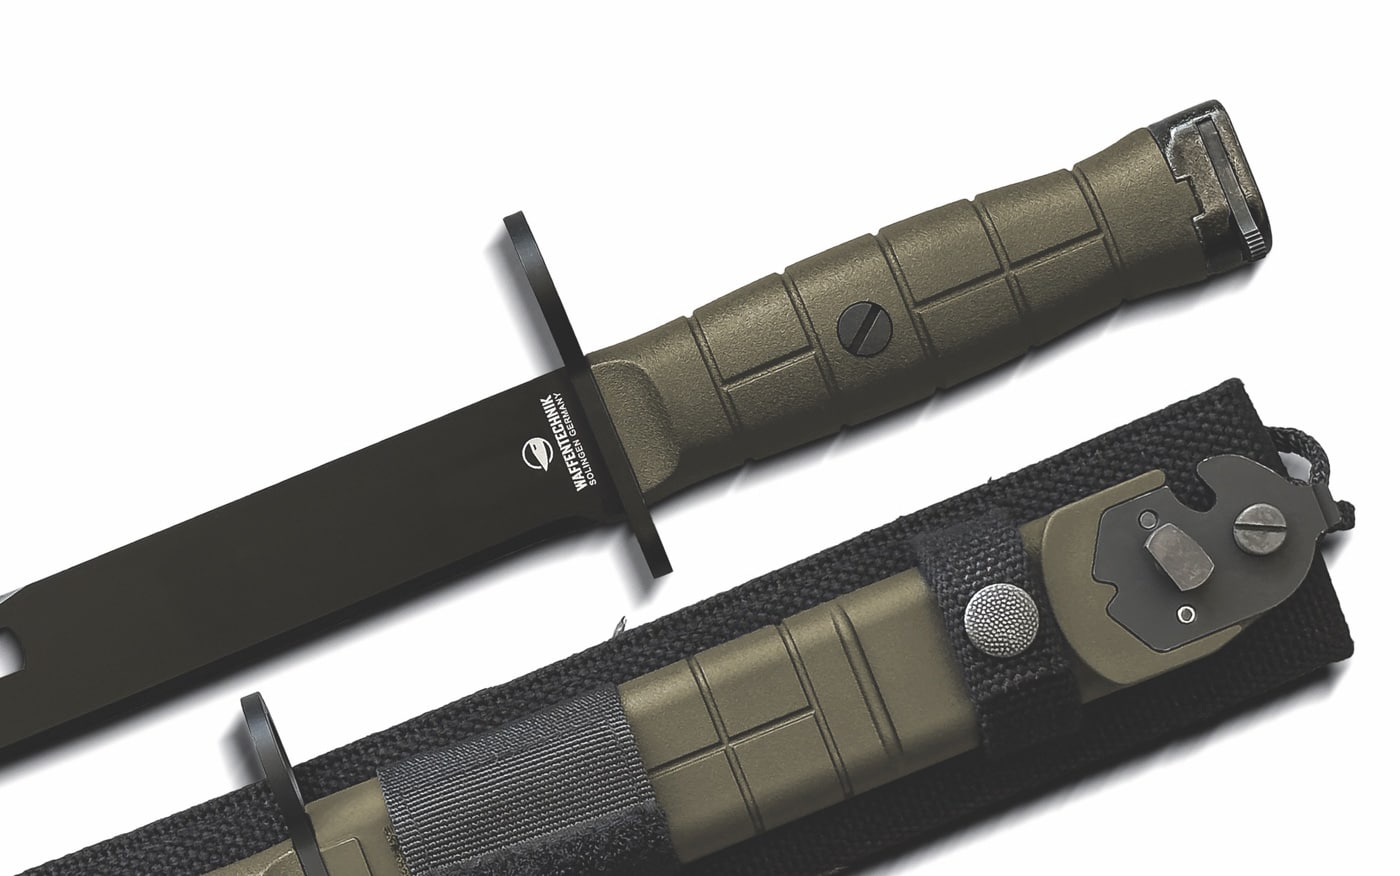 waffentechnik b2k bayonet review od green knife handle sheath wire cutter